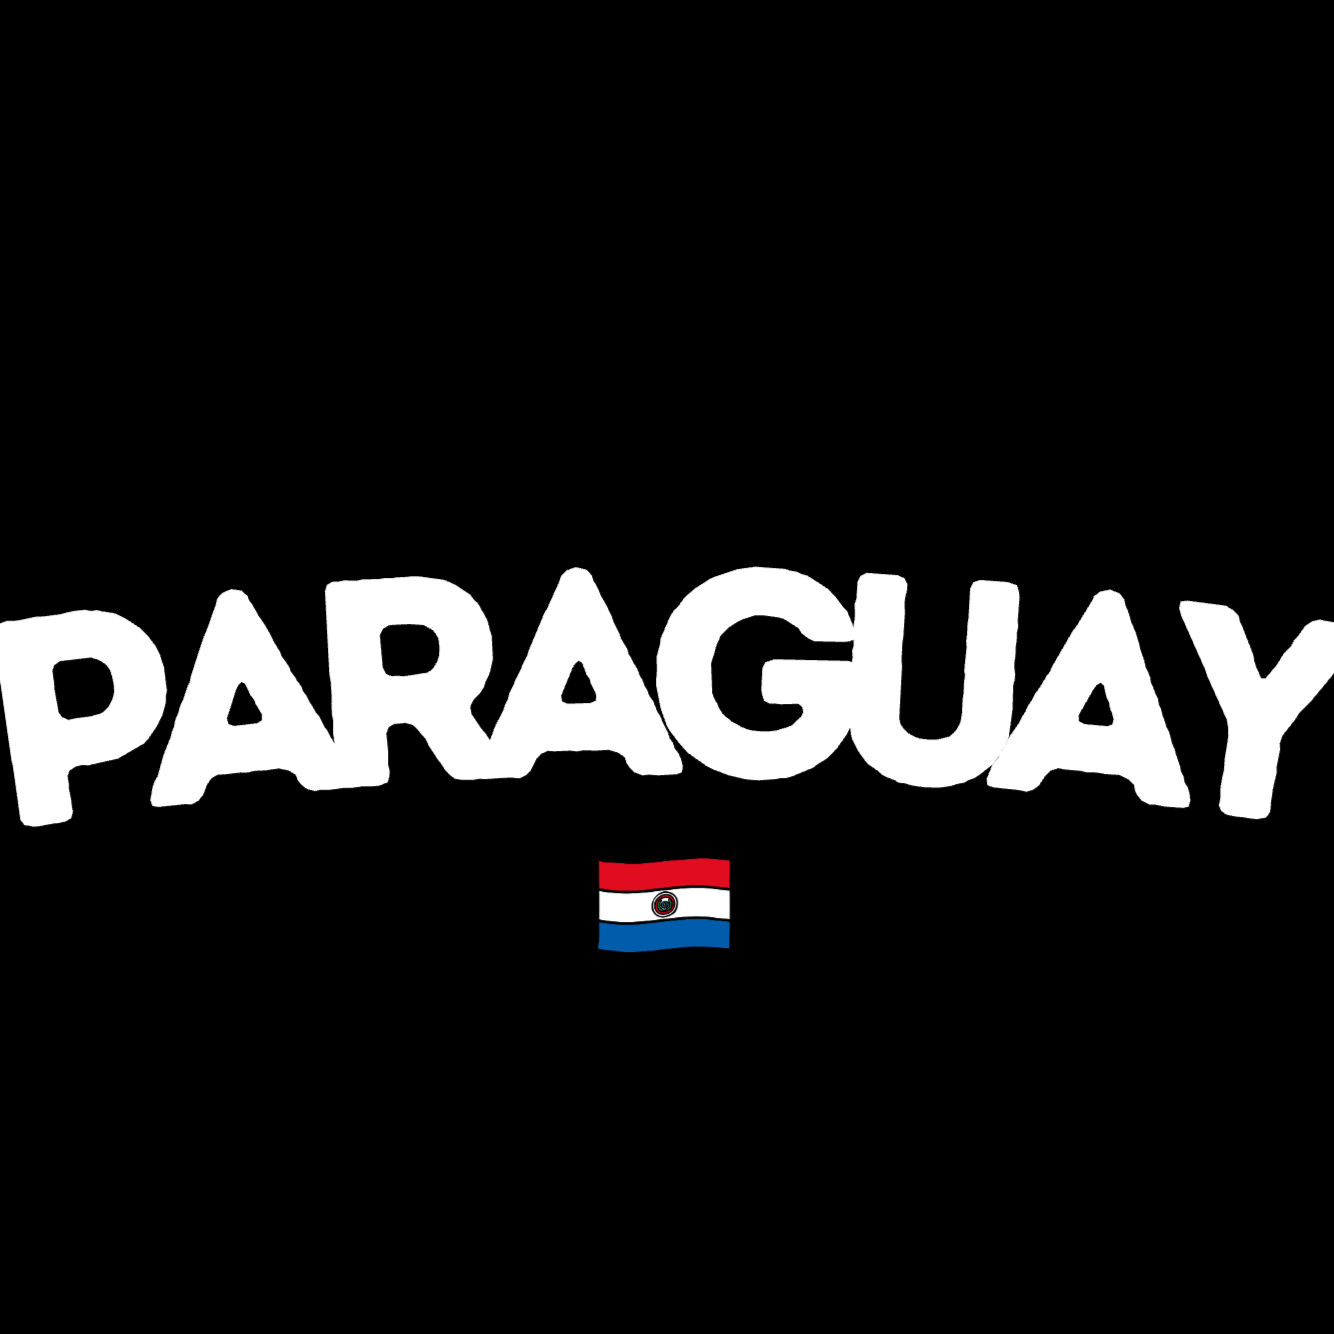 🇵🇾 Paraguay